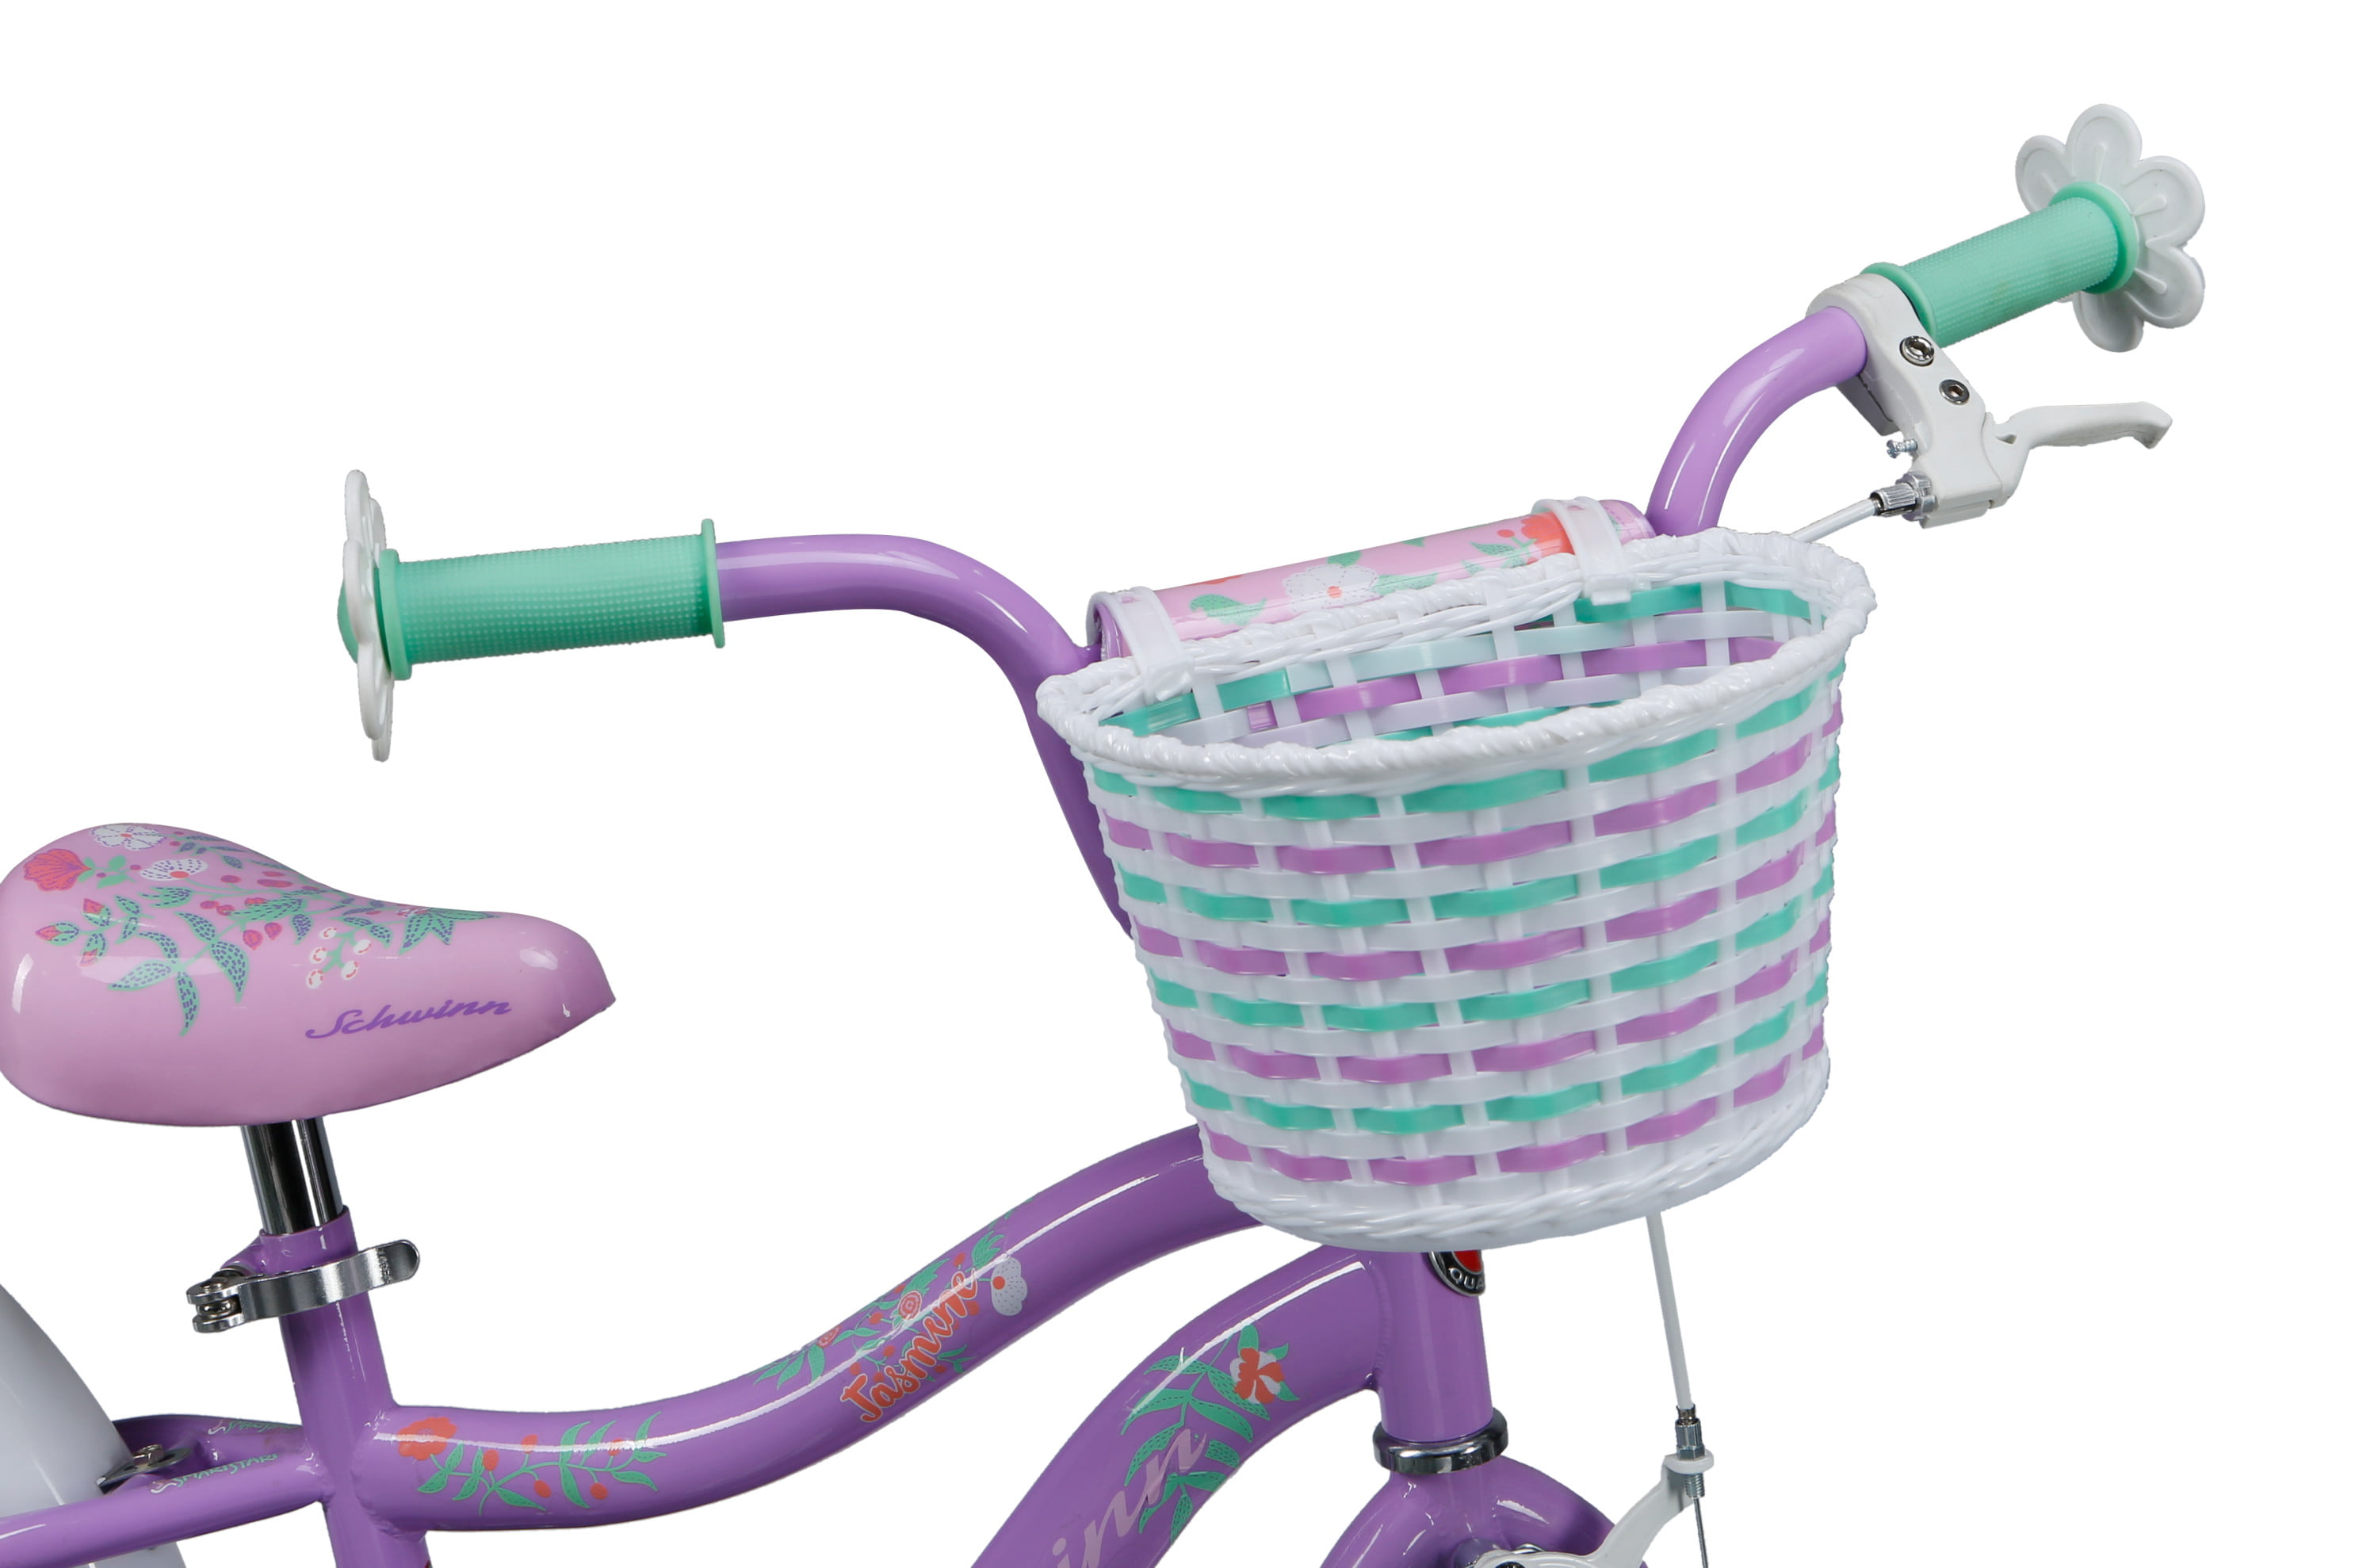 schwinn jasmine girl's bicycle